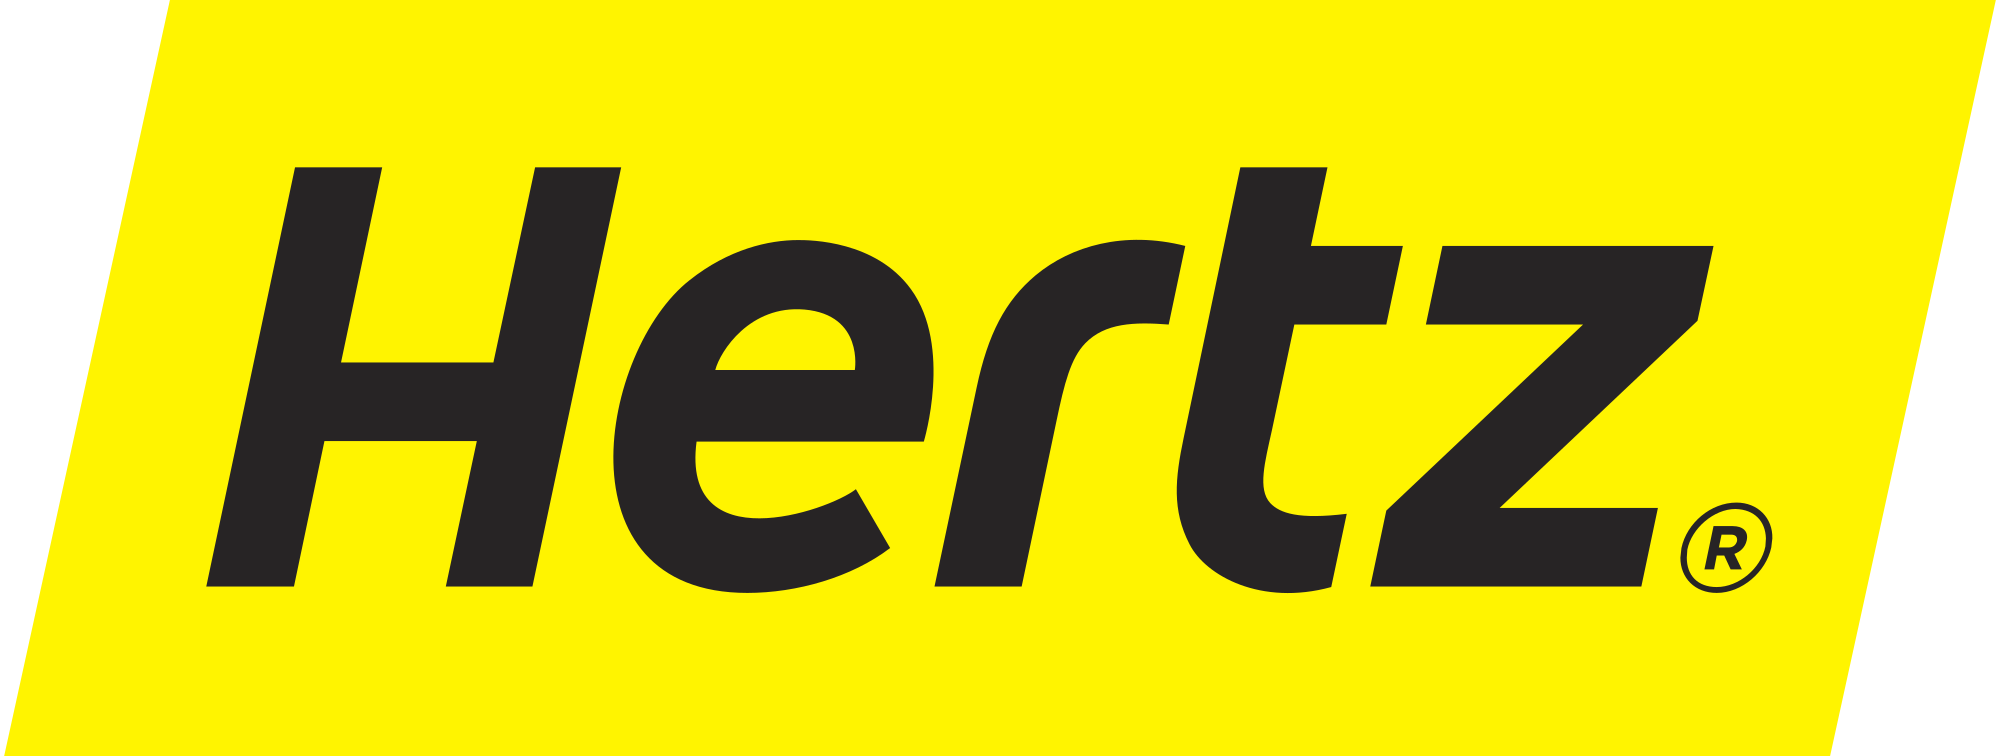 2000px-Hertz_Logo.png